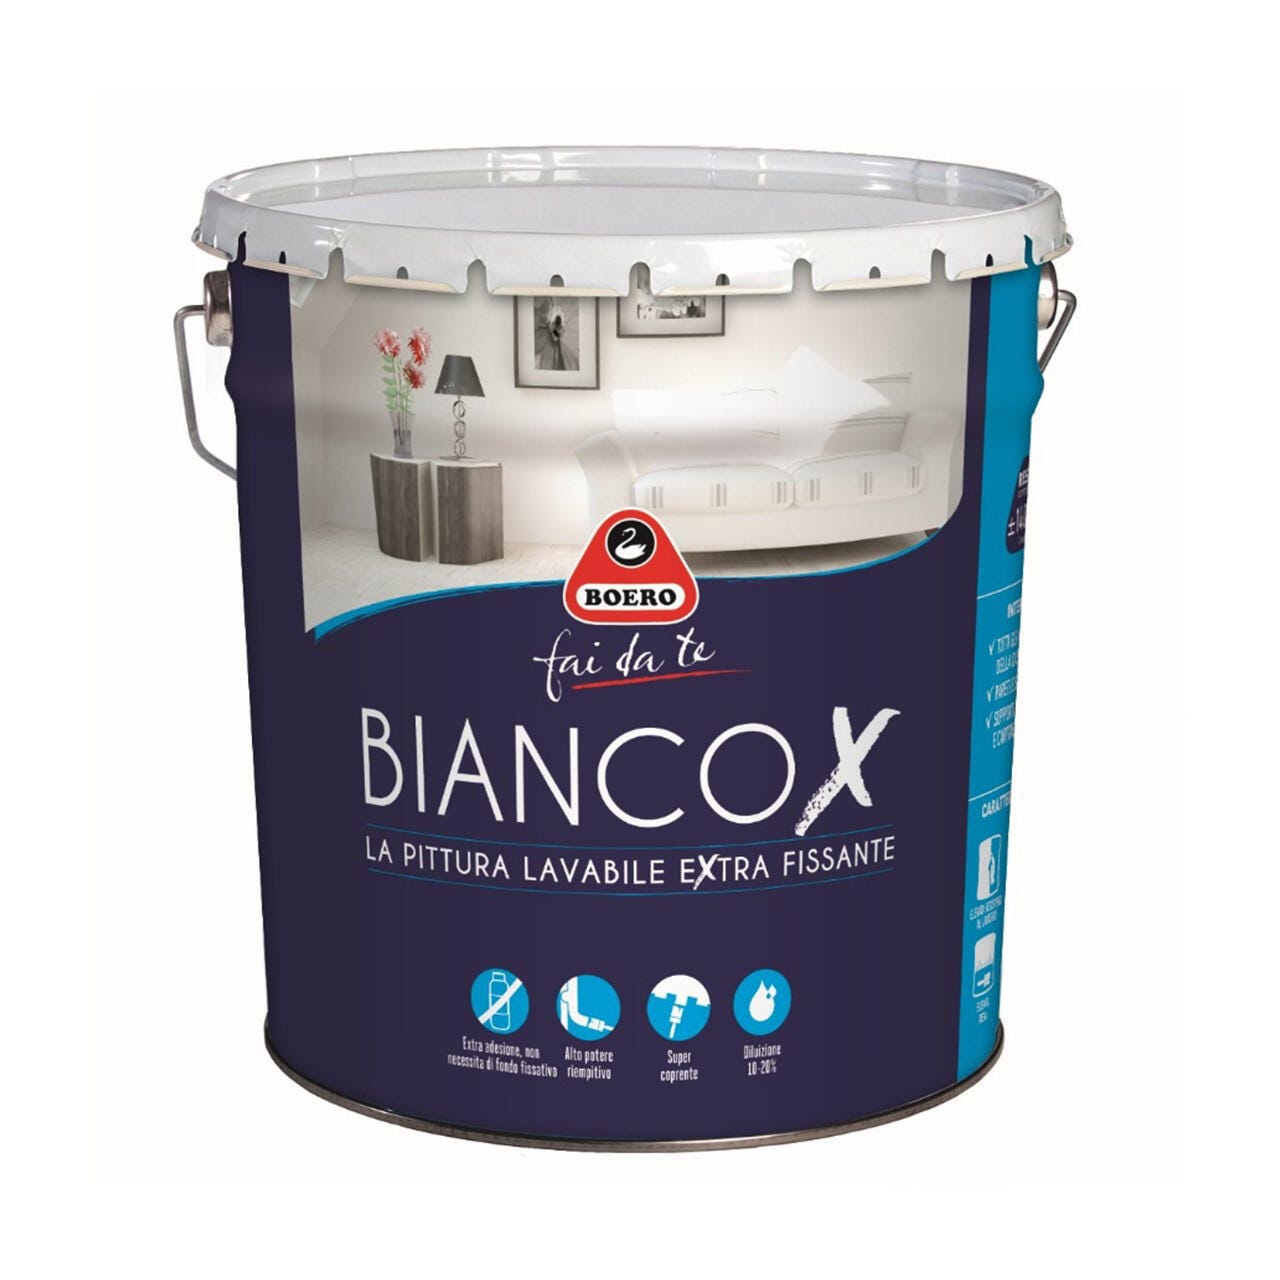 Pittura per interni lavabile, BOERO BiancoX bianco opaco, 14 L